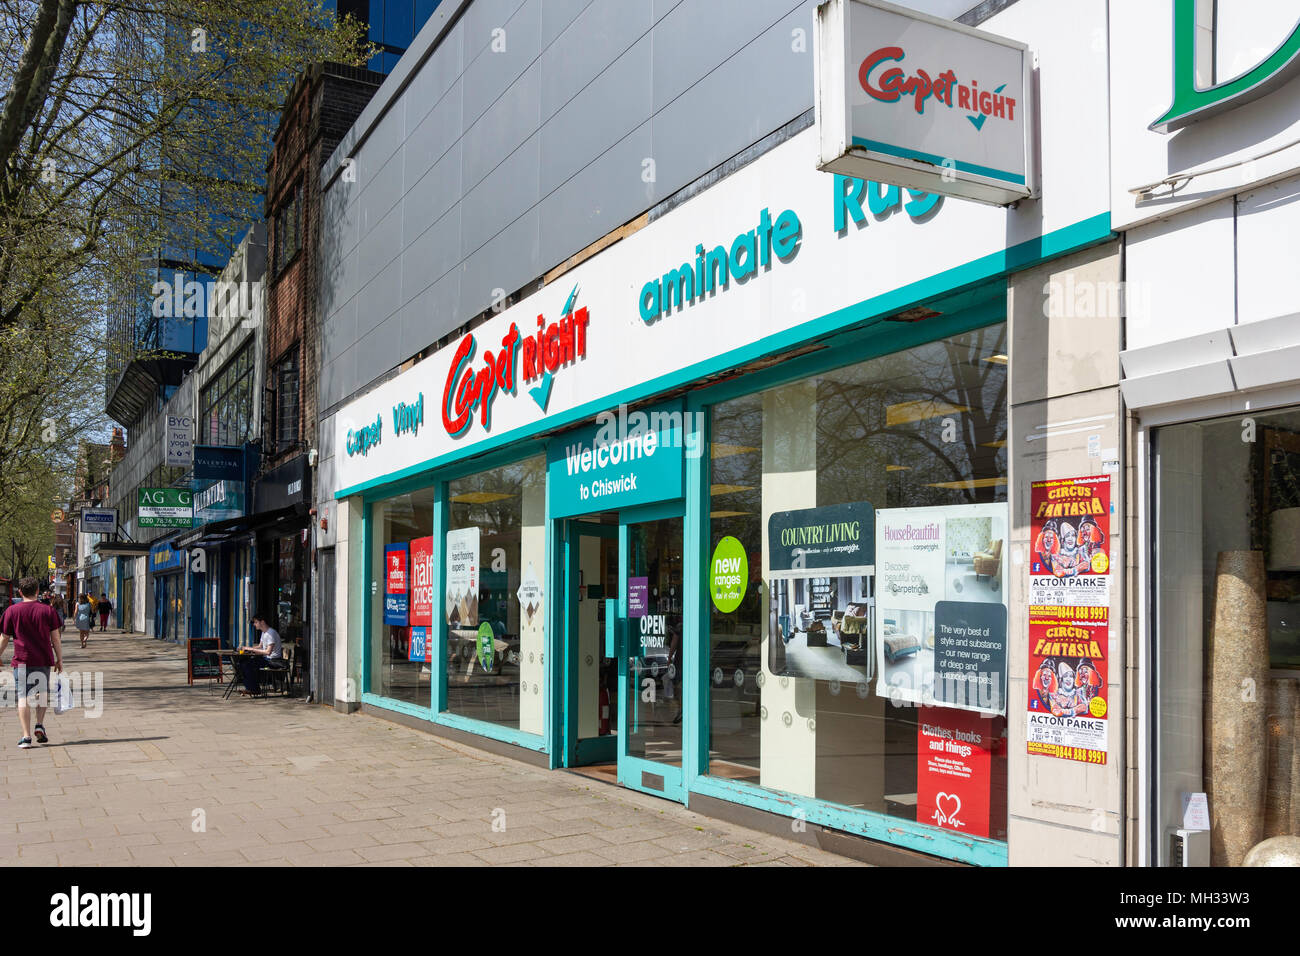 Carpetright store, Chiswick High Street, Chiswick, London Borough of Hounslow, Greater London, England, United Kingdom Stock Photo